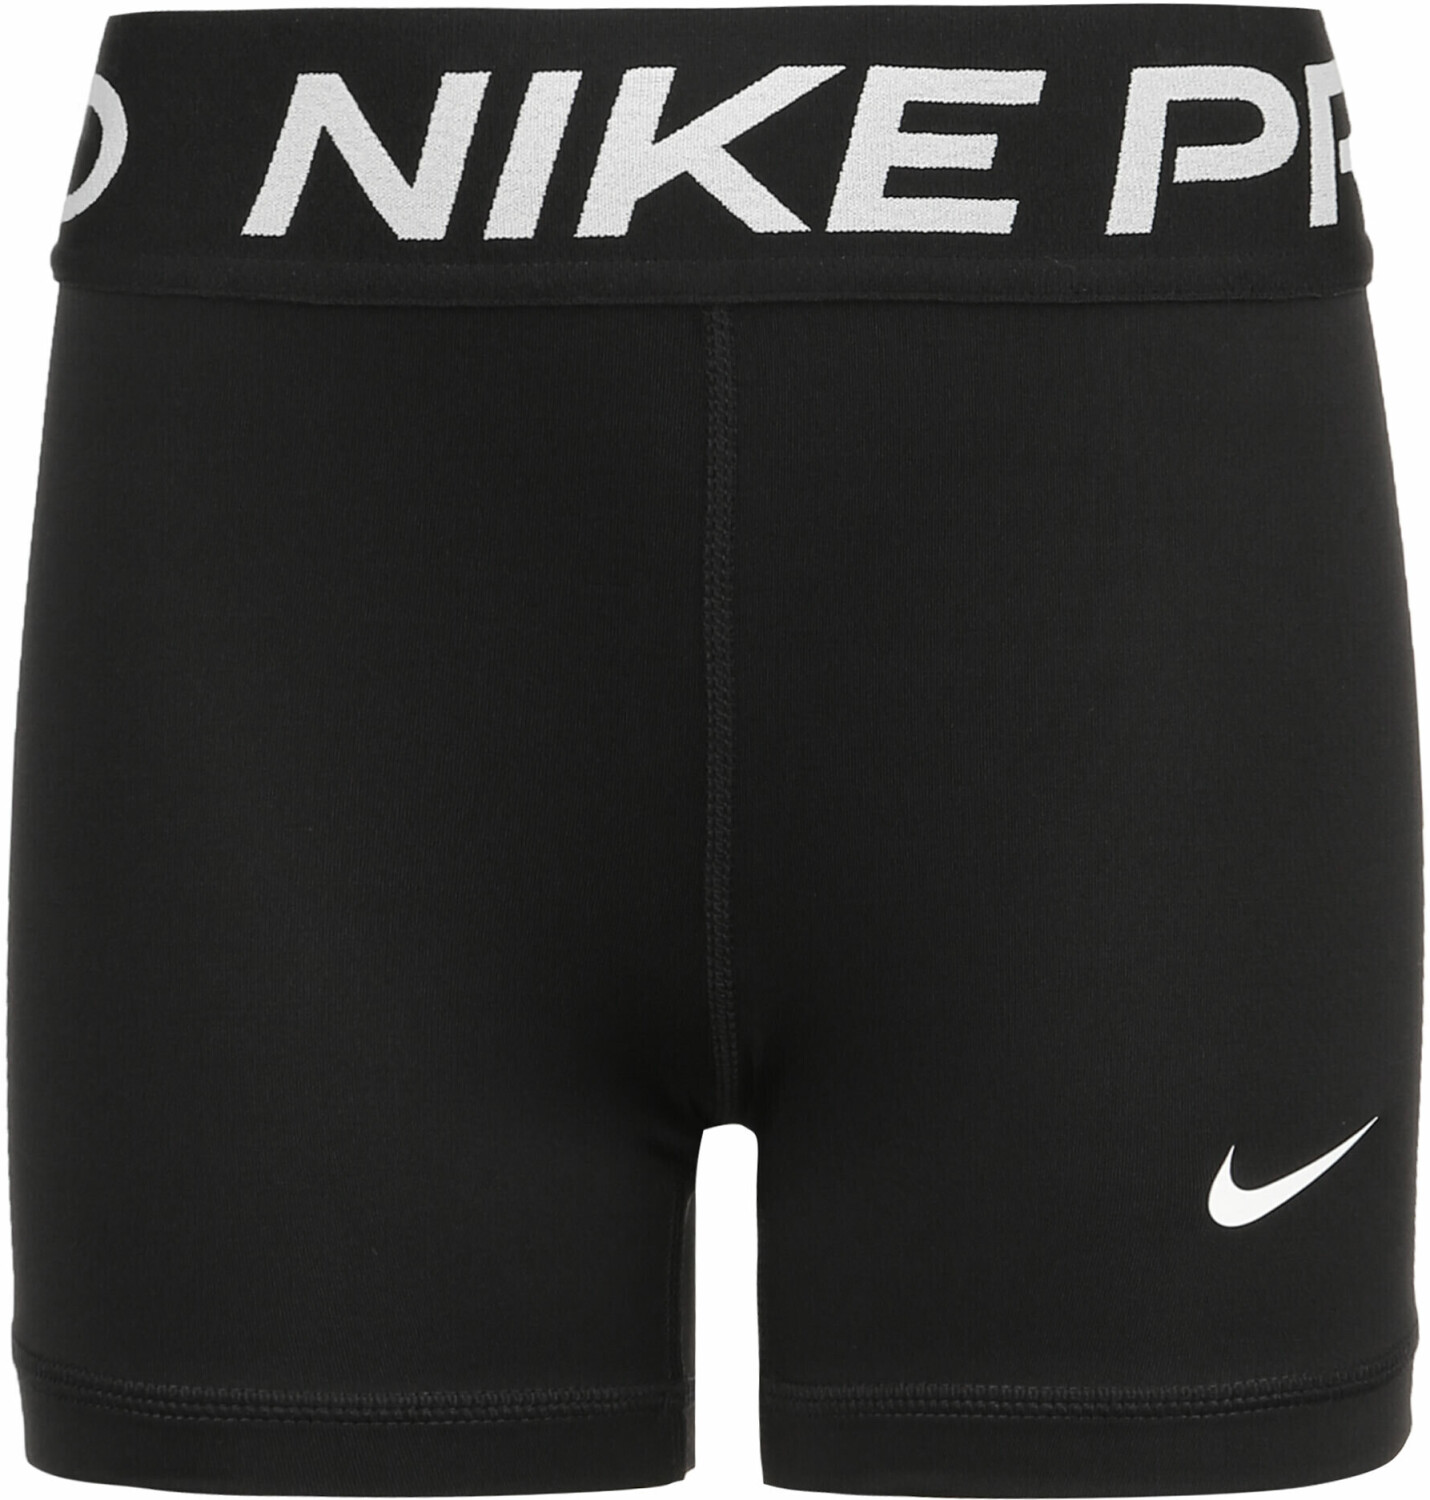 Kids Nike Pro Shorts.